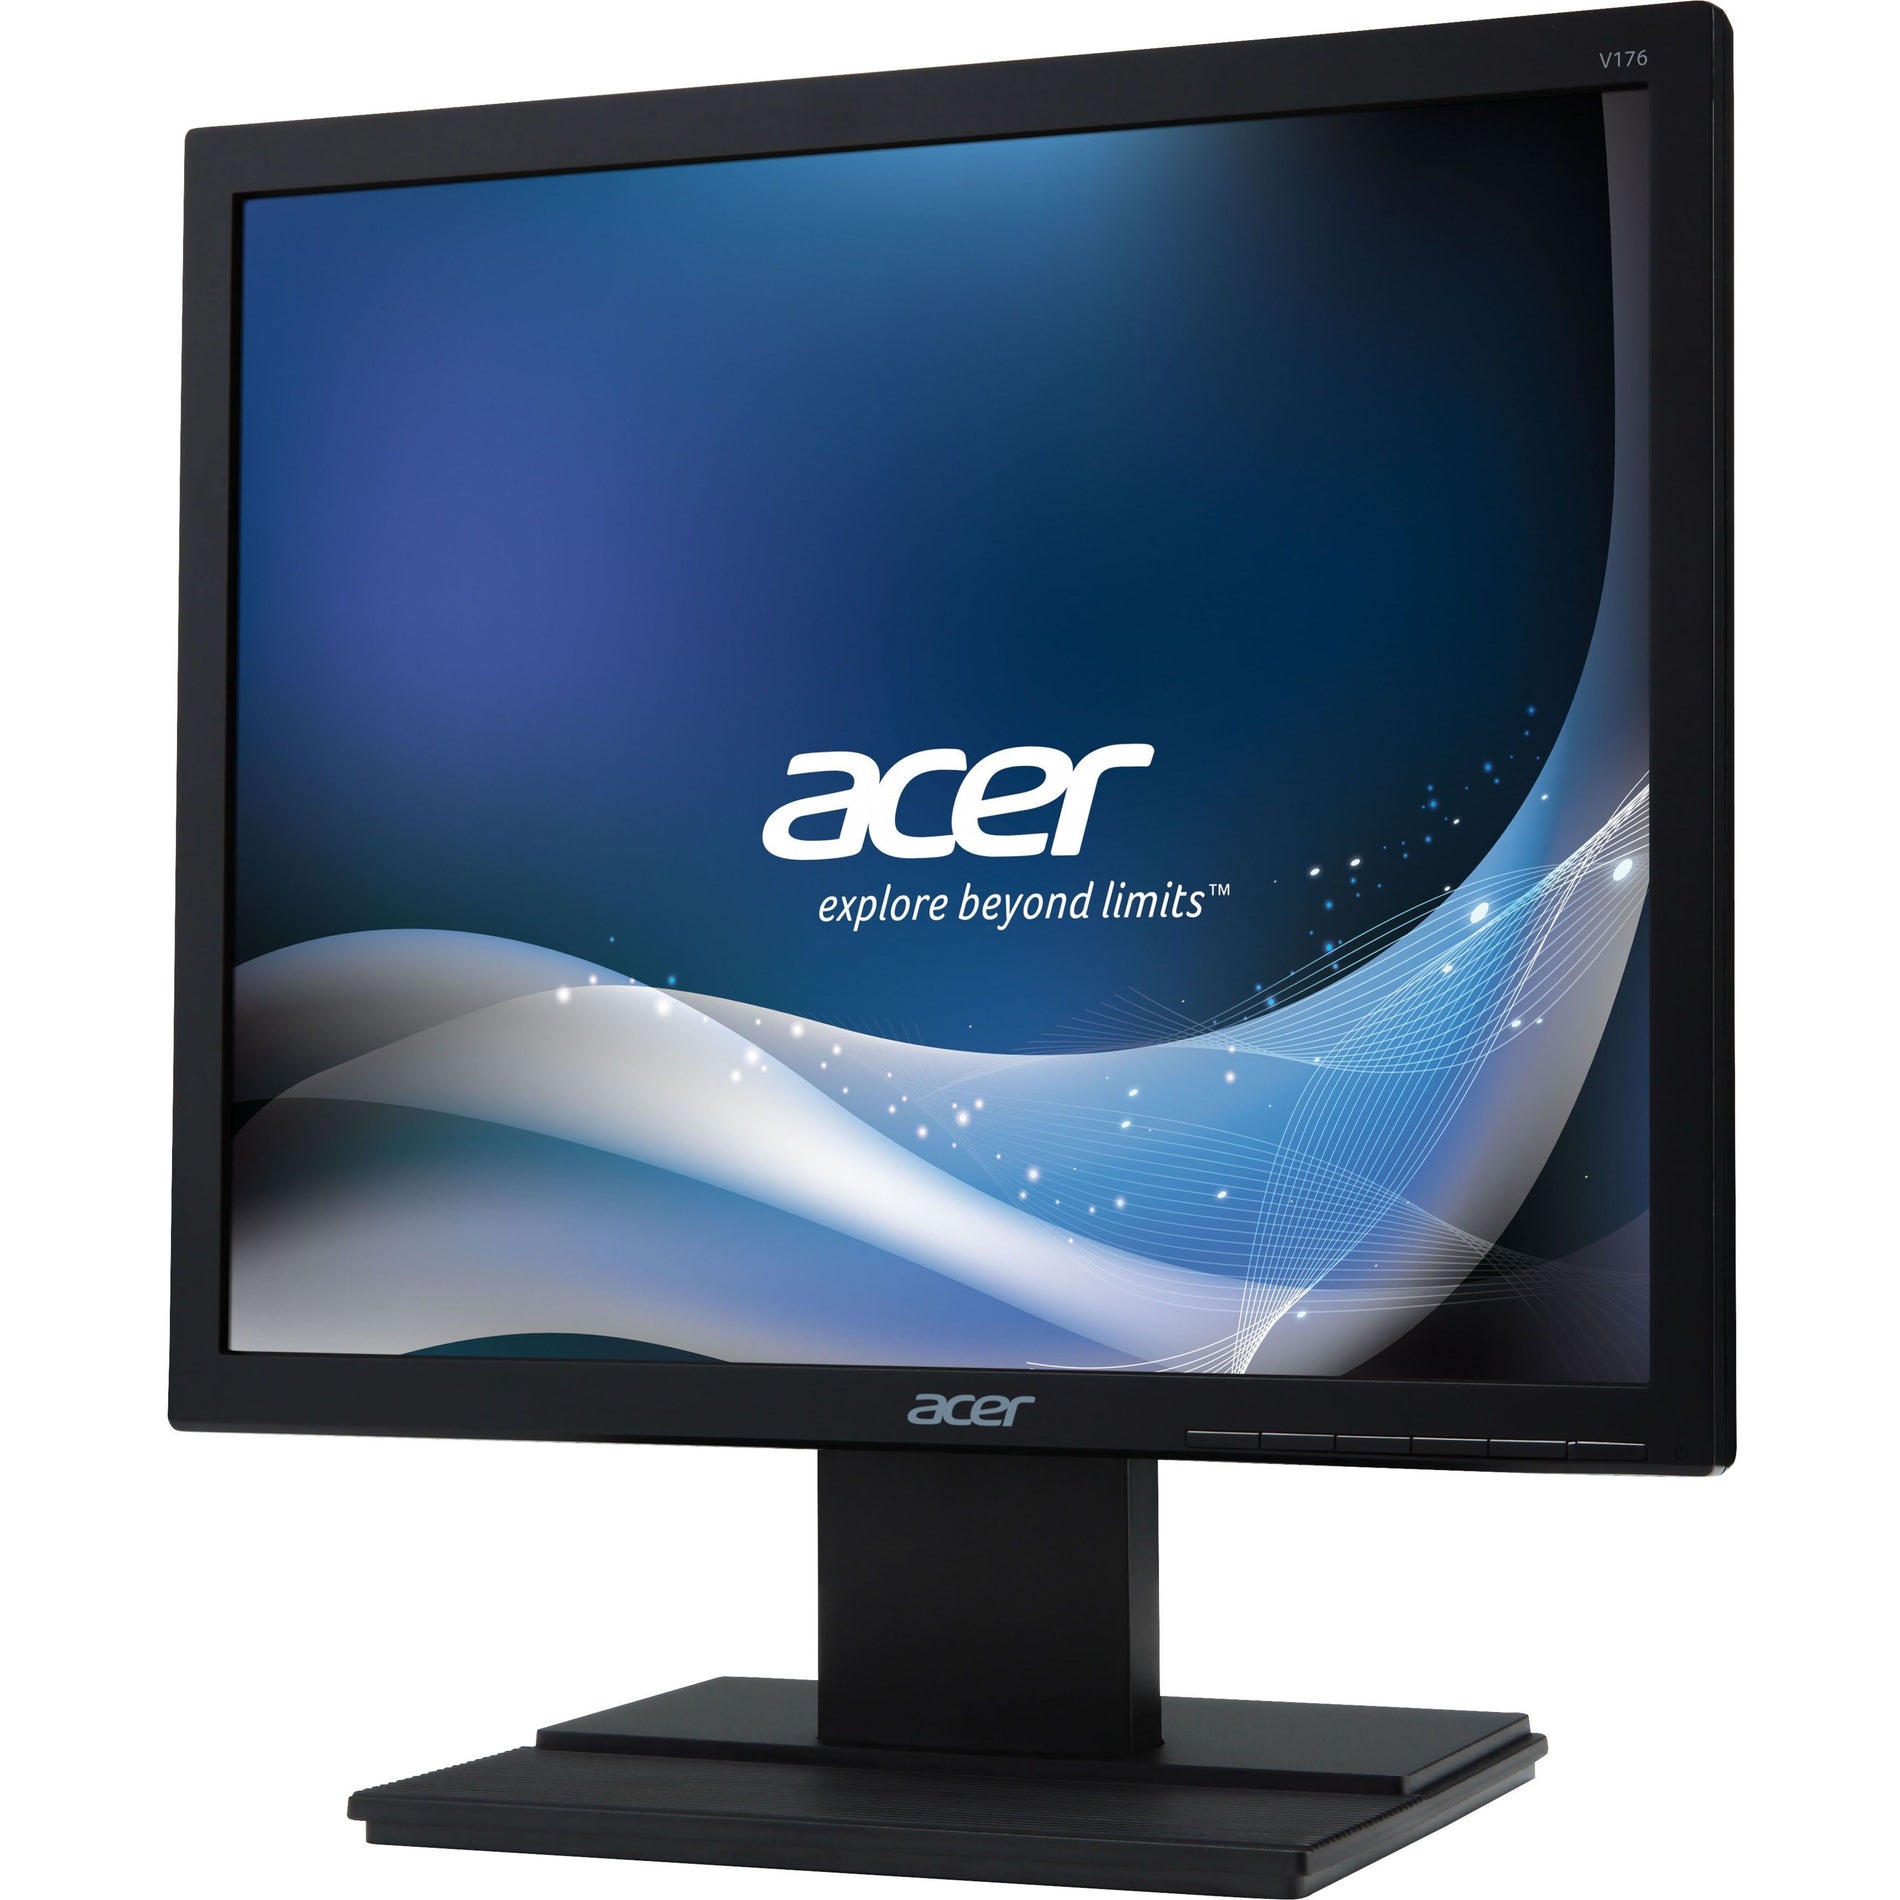 Acer UM.BV6AA.001 V176L LCD Monitor, 17" 5:4 5ms 100000000:1 Max(ACM) 250nits LED, VGA DVI (w/HDCP) US PA PA TCO6.0 Black